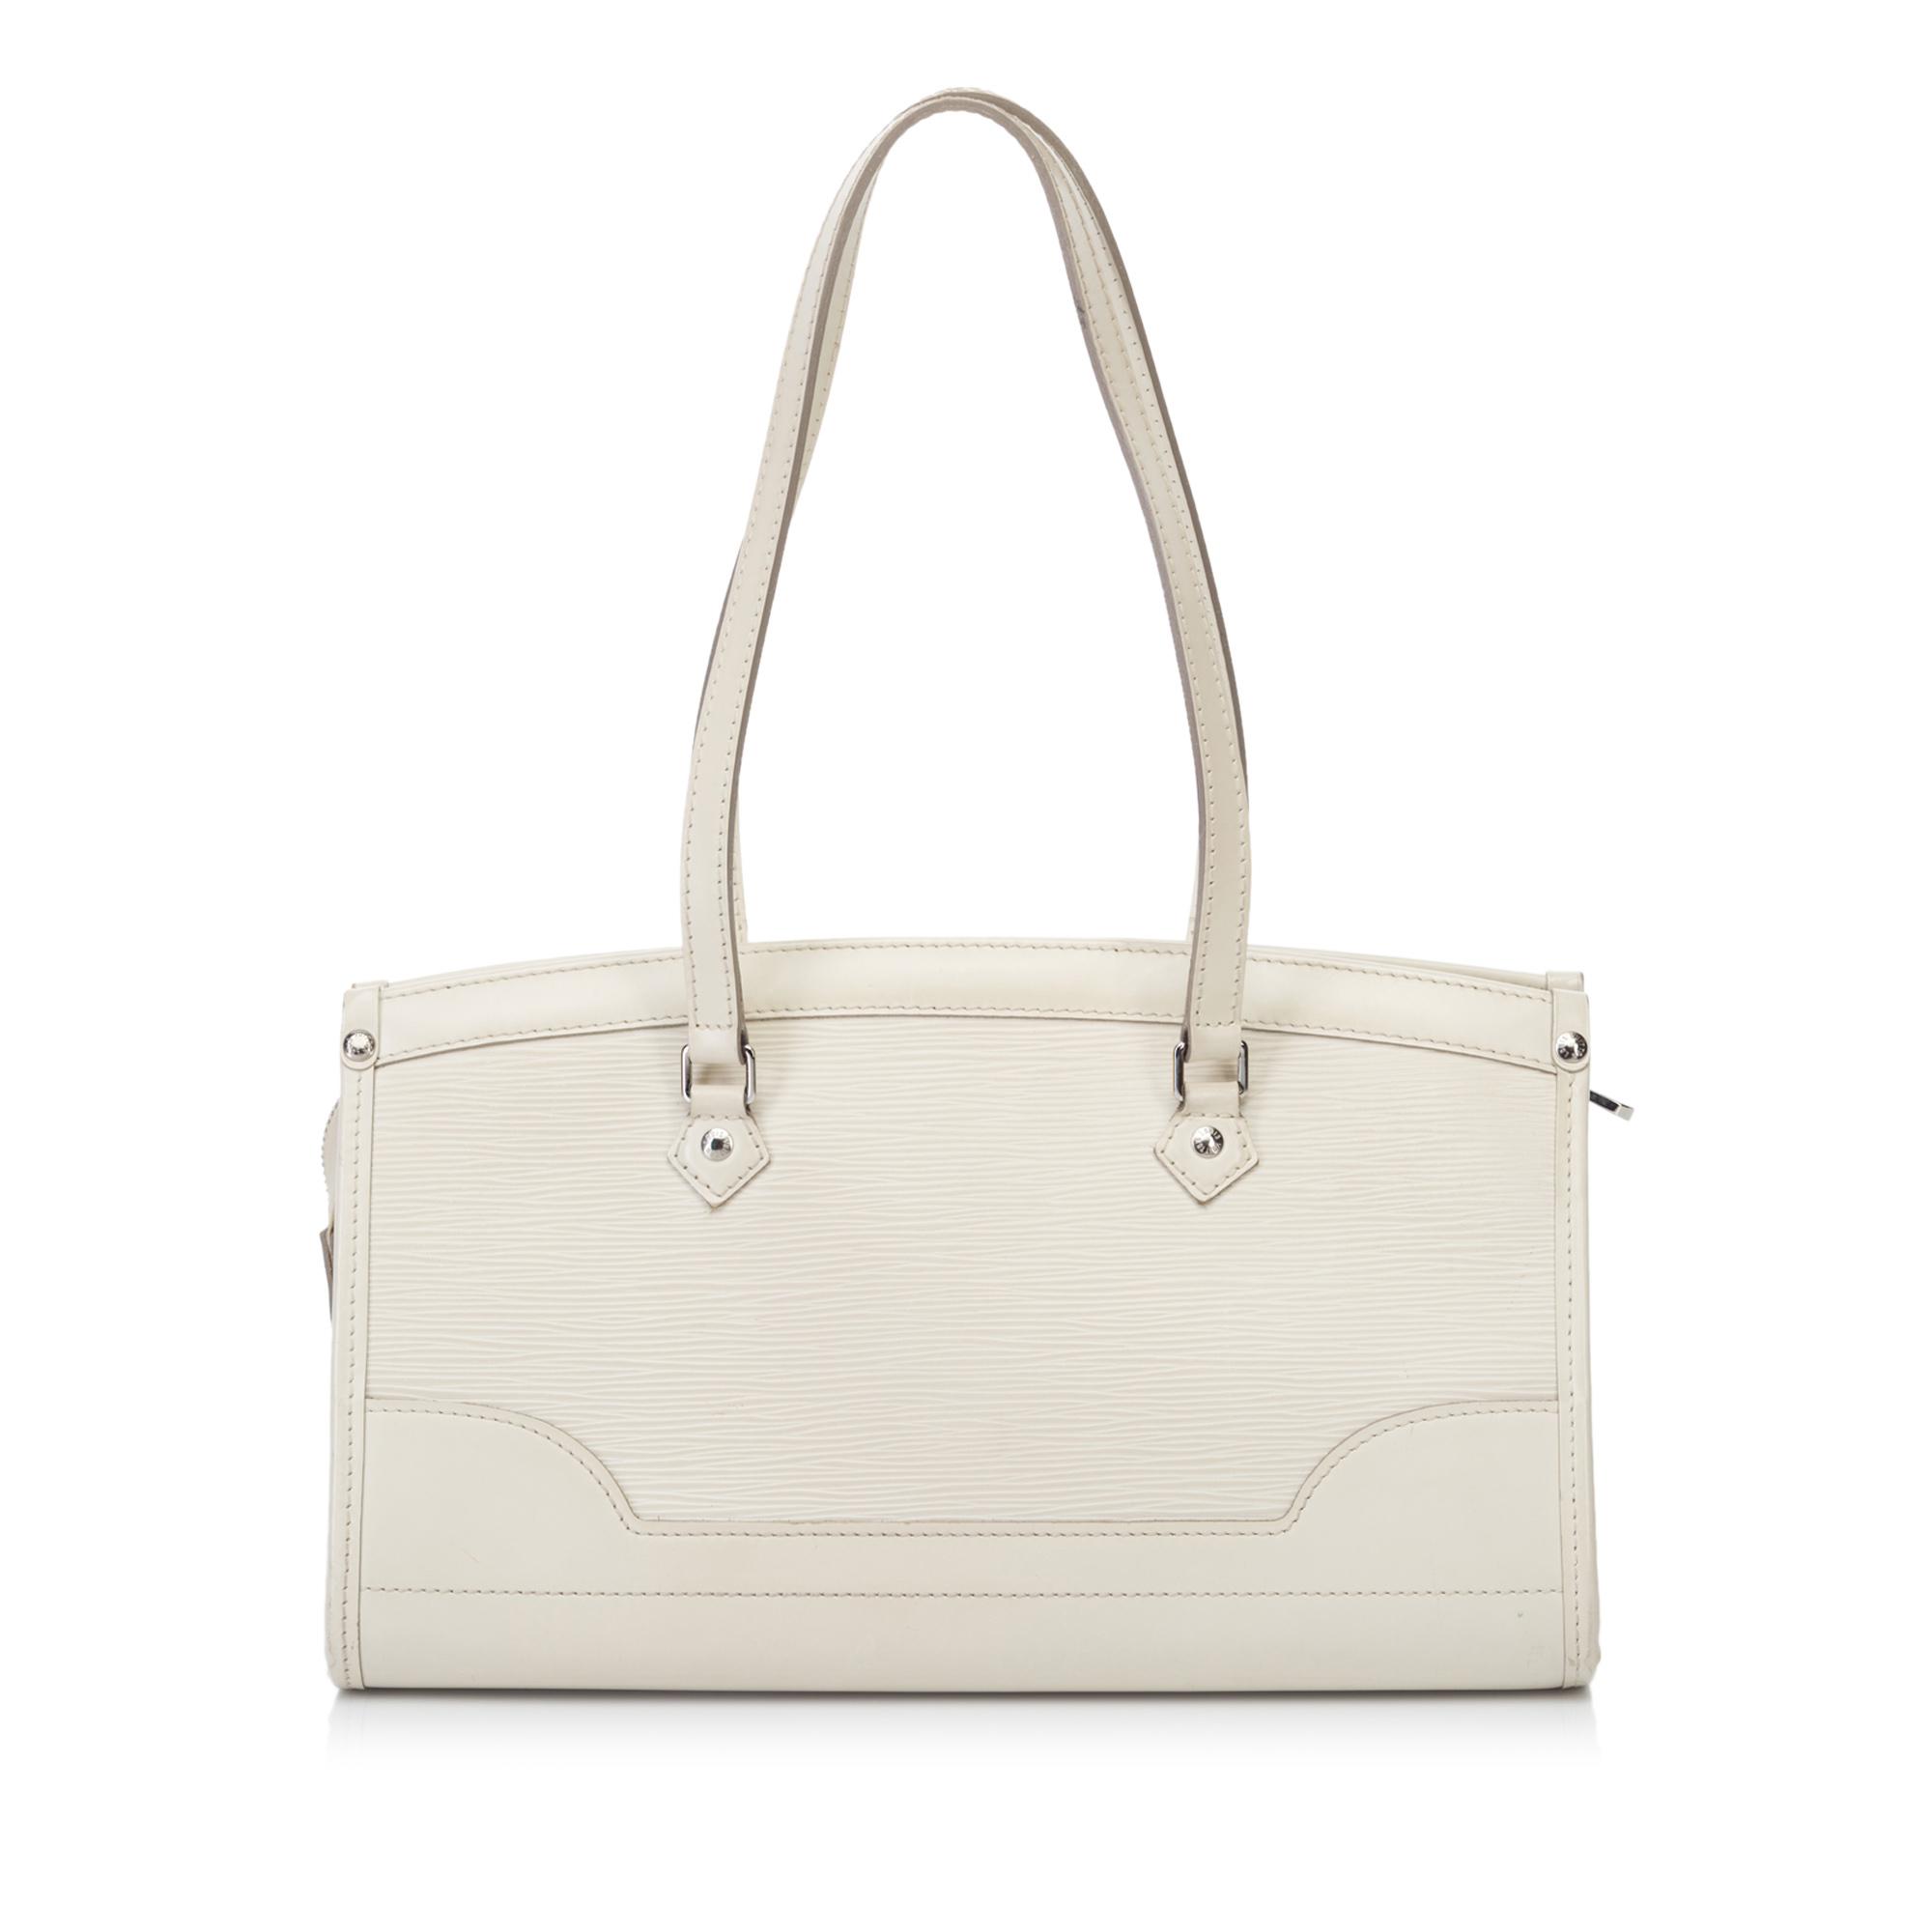 Lyst - Louis Vuitton Ivory Epi Leather Madeleine Pm Bag in White